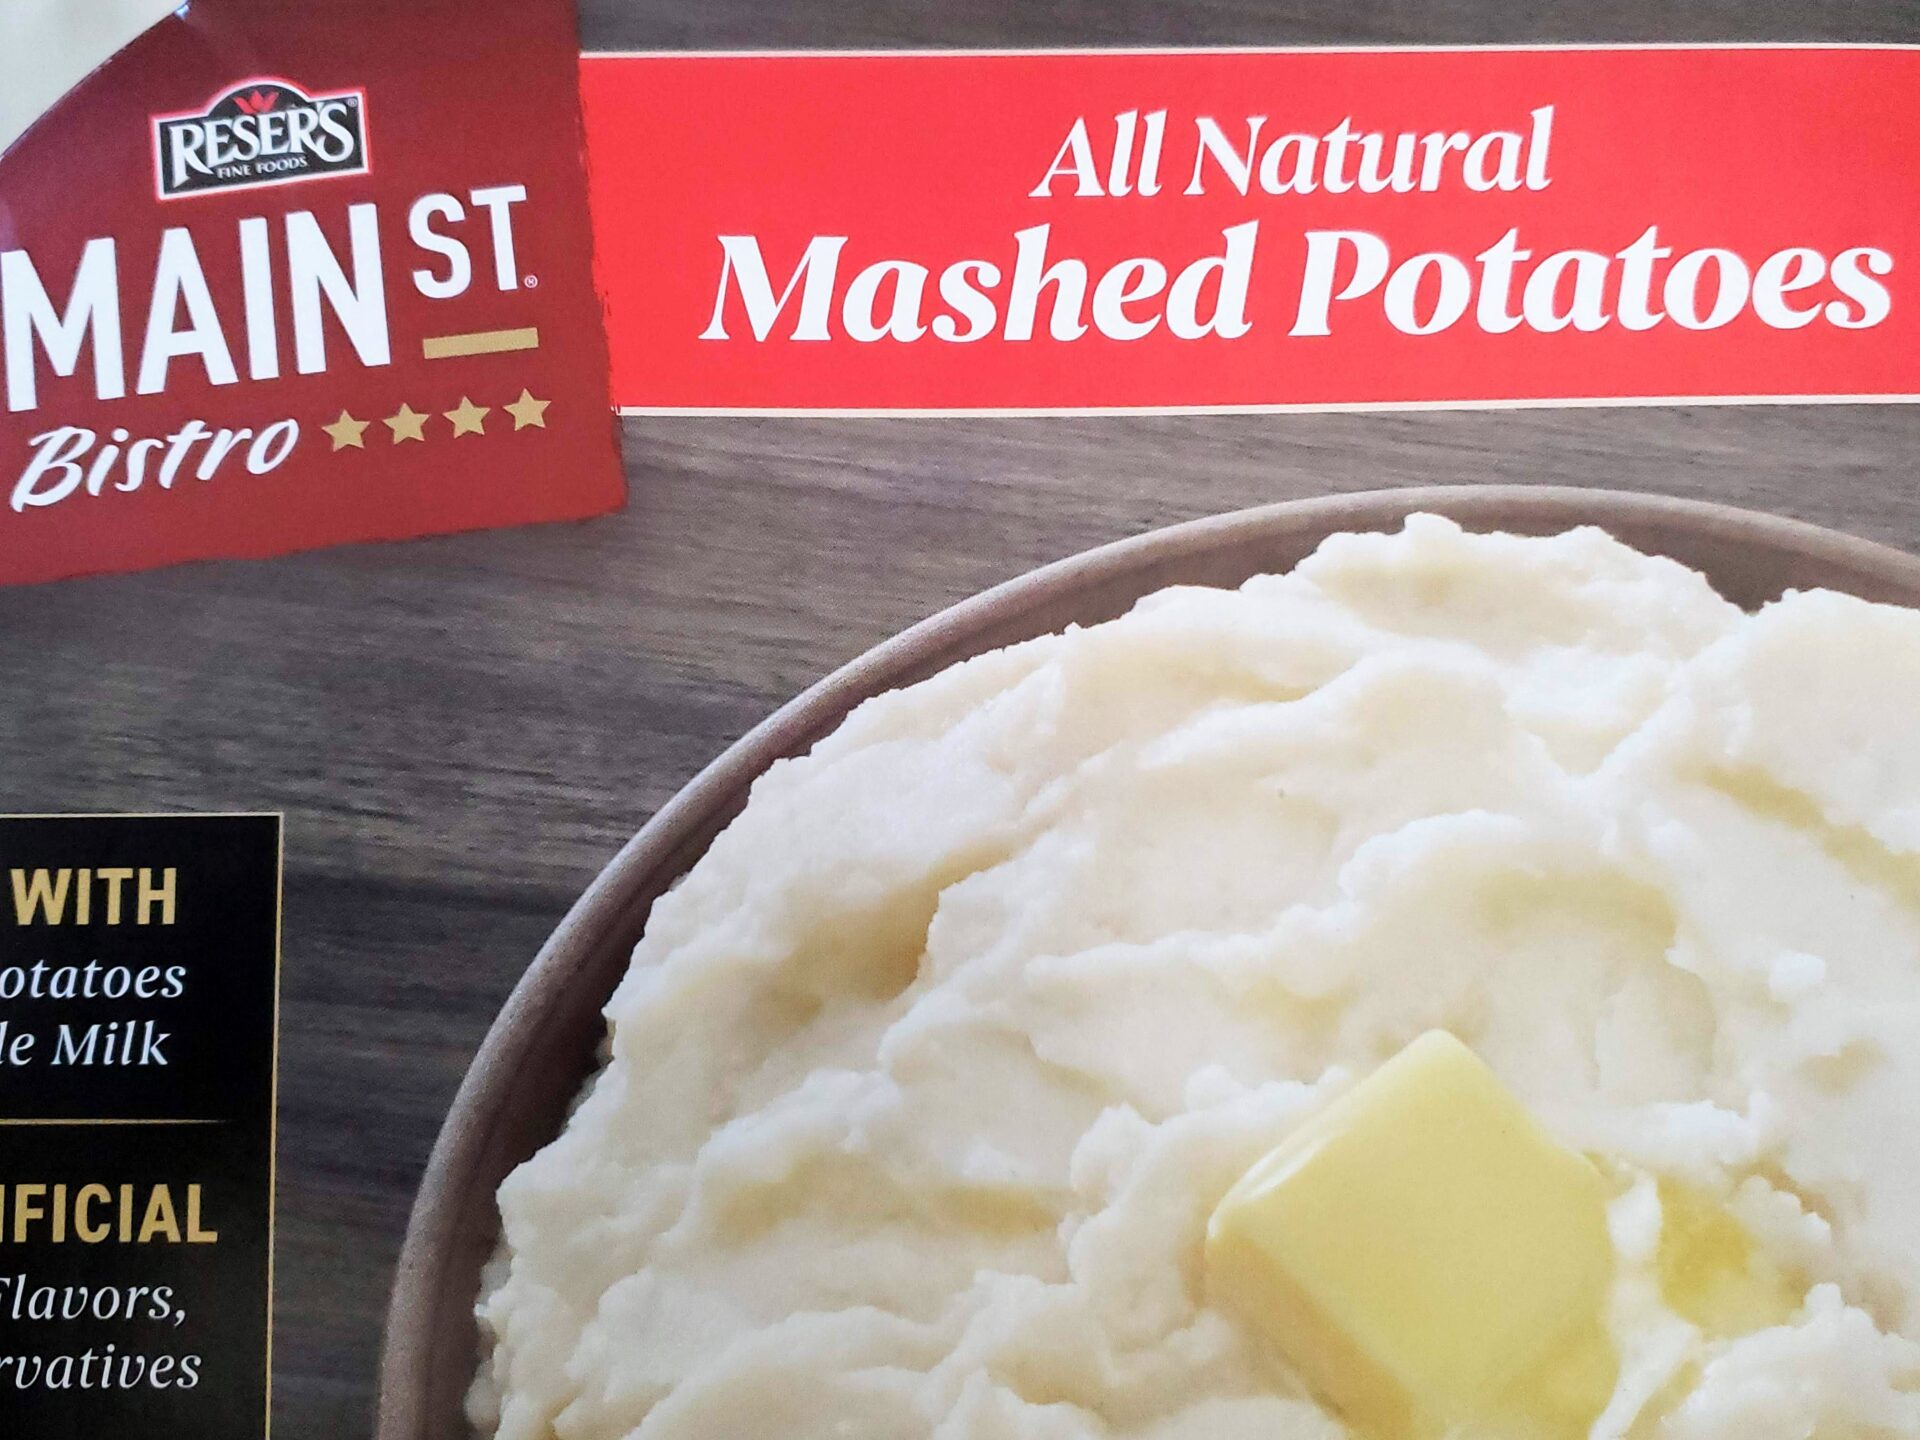 Main-St.-Bistro-Mashed-Potatoes